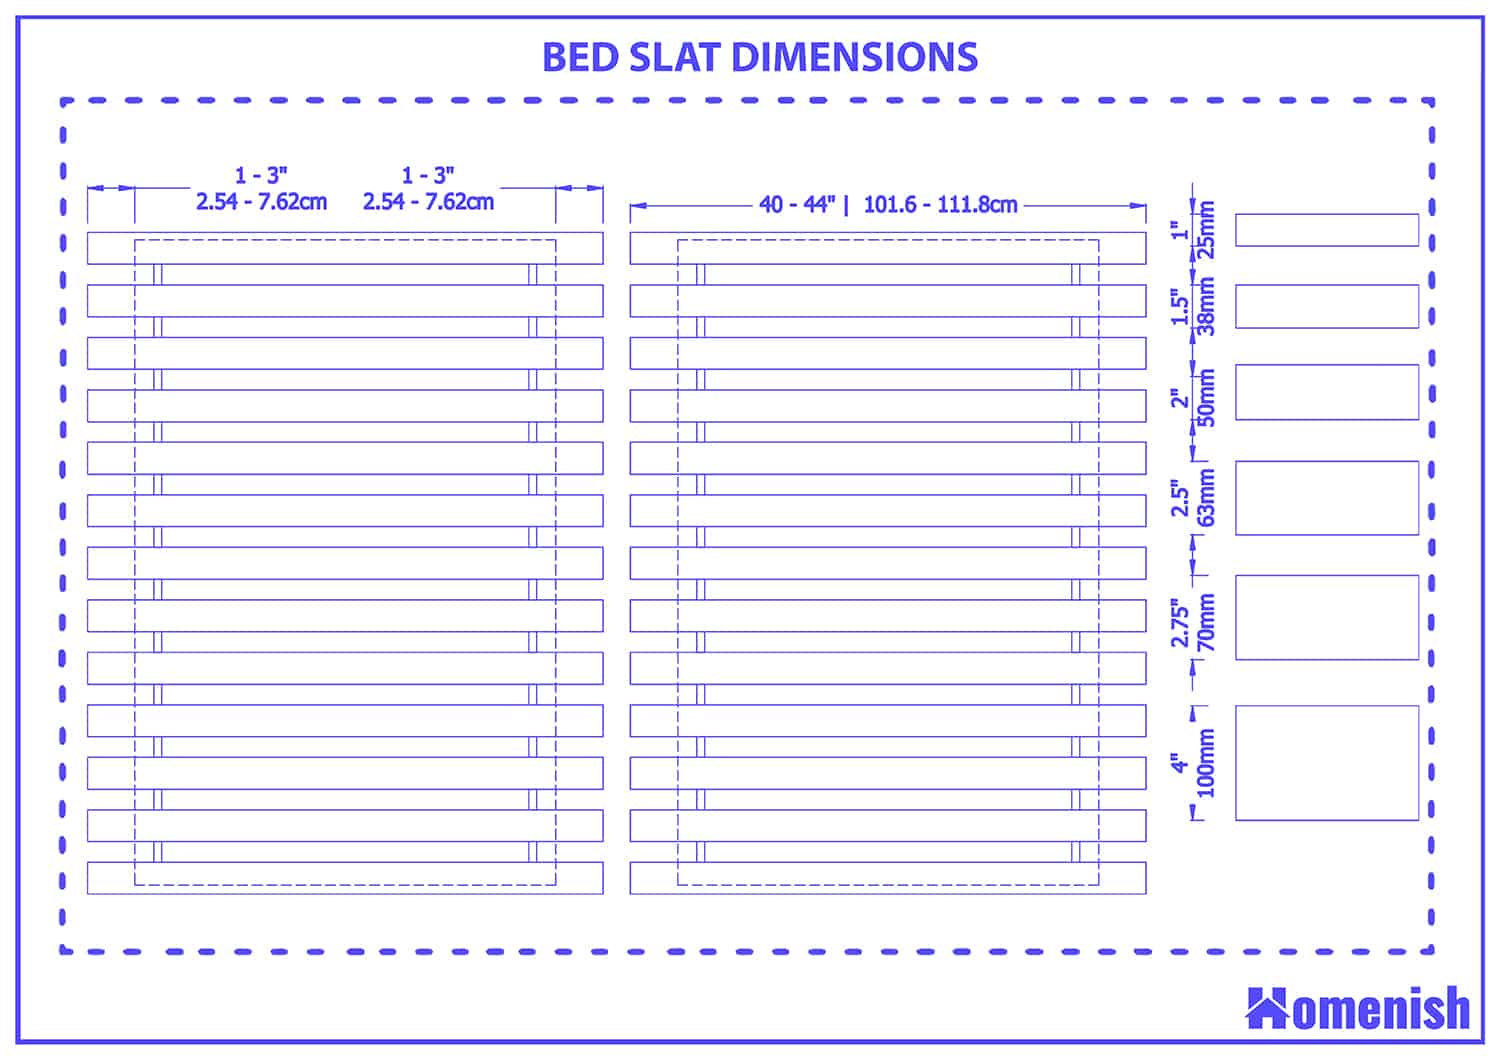 Bed slat dimensions